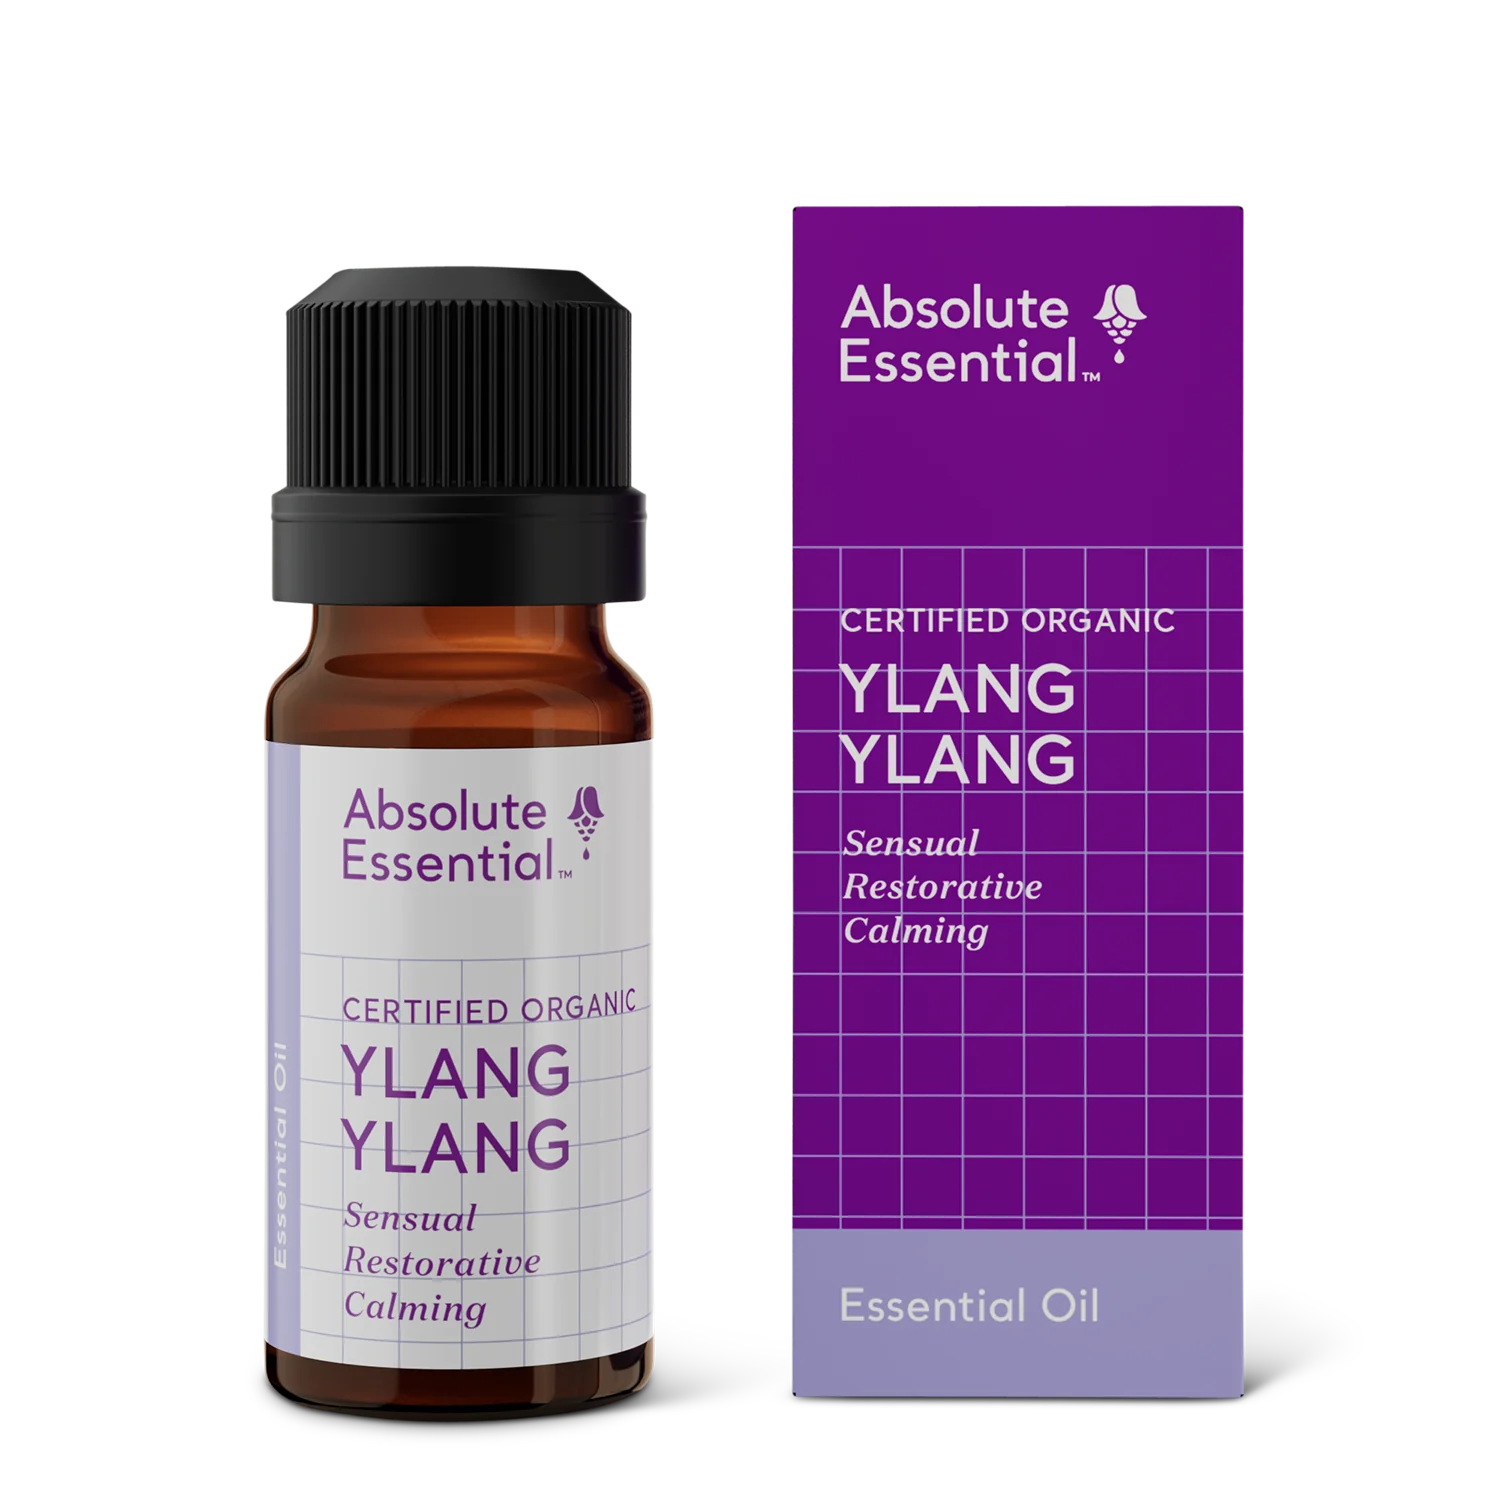 Absolute Essential - Ylang Ylang Oil - Urban Naturals